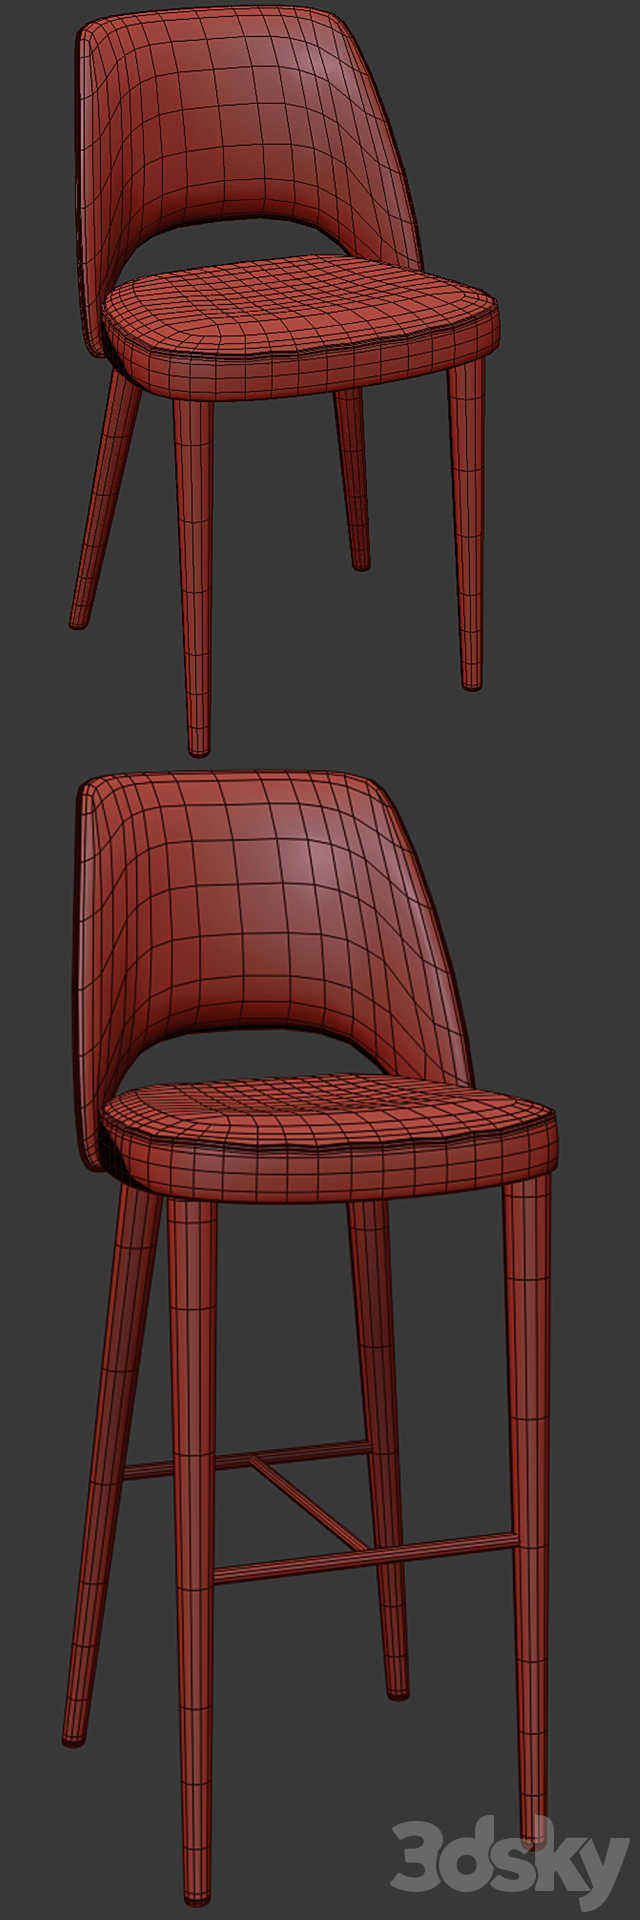 Astor Dining Chair And Bar Stool 3DSMax File - thumbnail 3